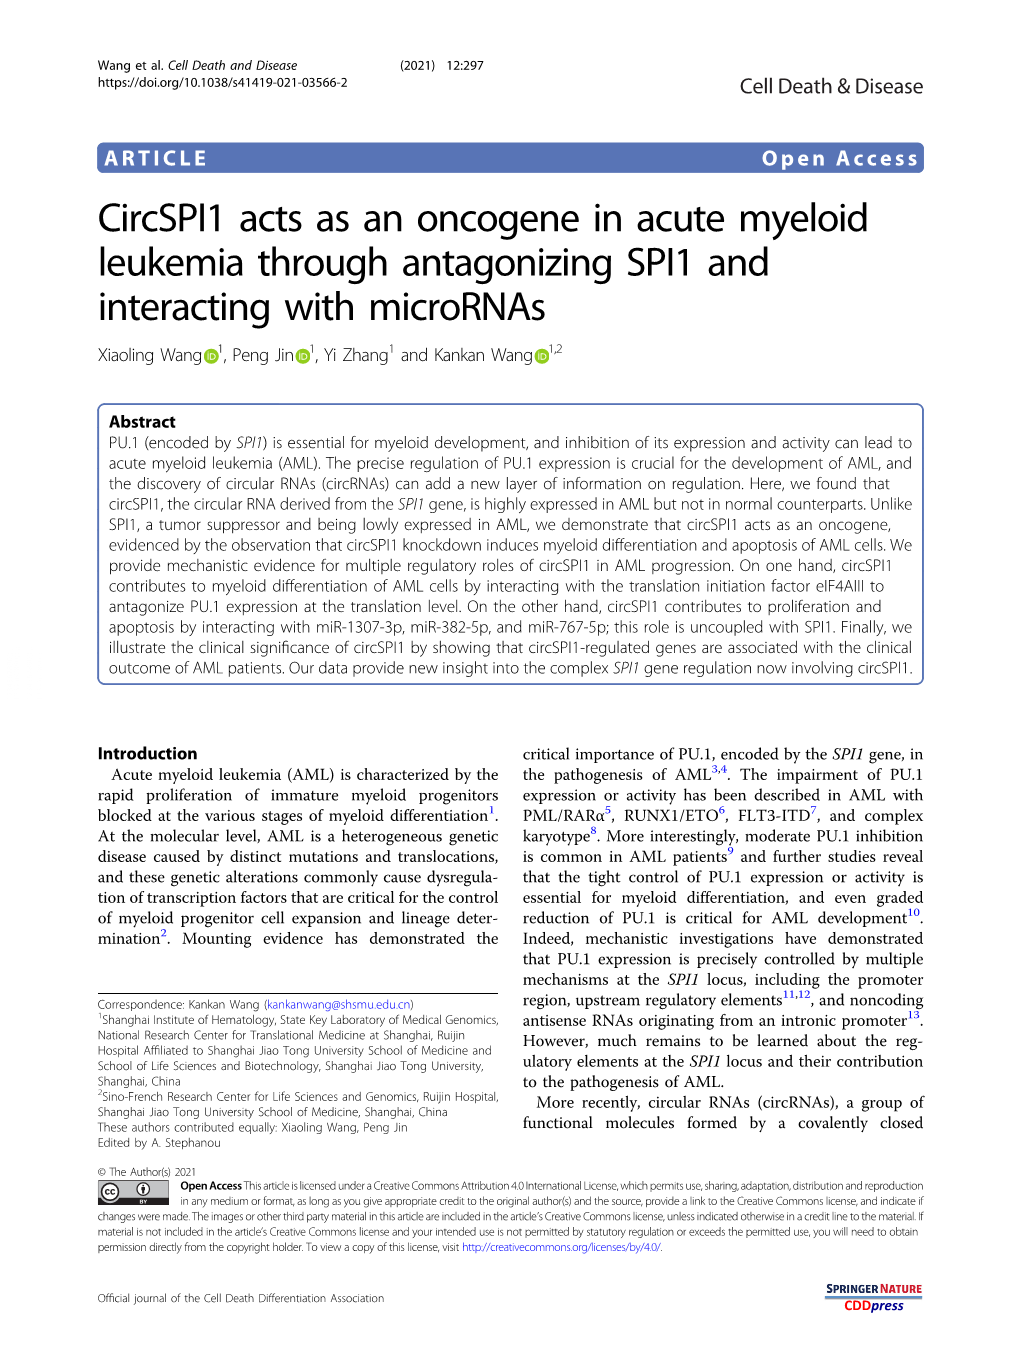 Circspi1 Acts As an Oncogene in Acute Myeloid Leukemia Through